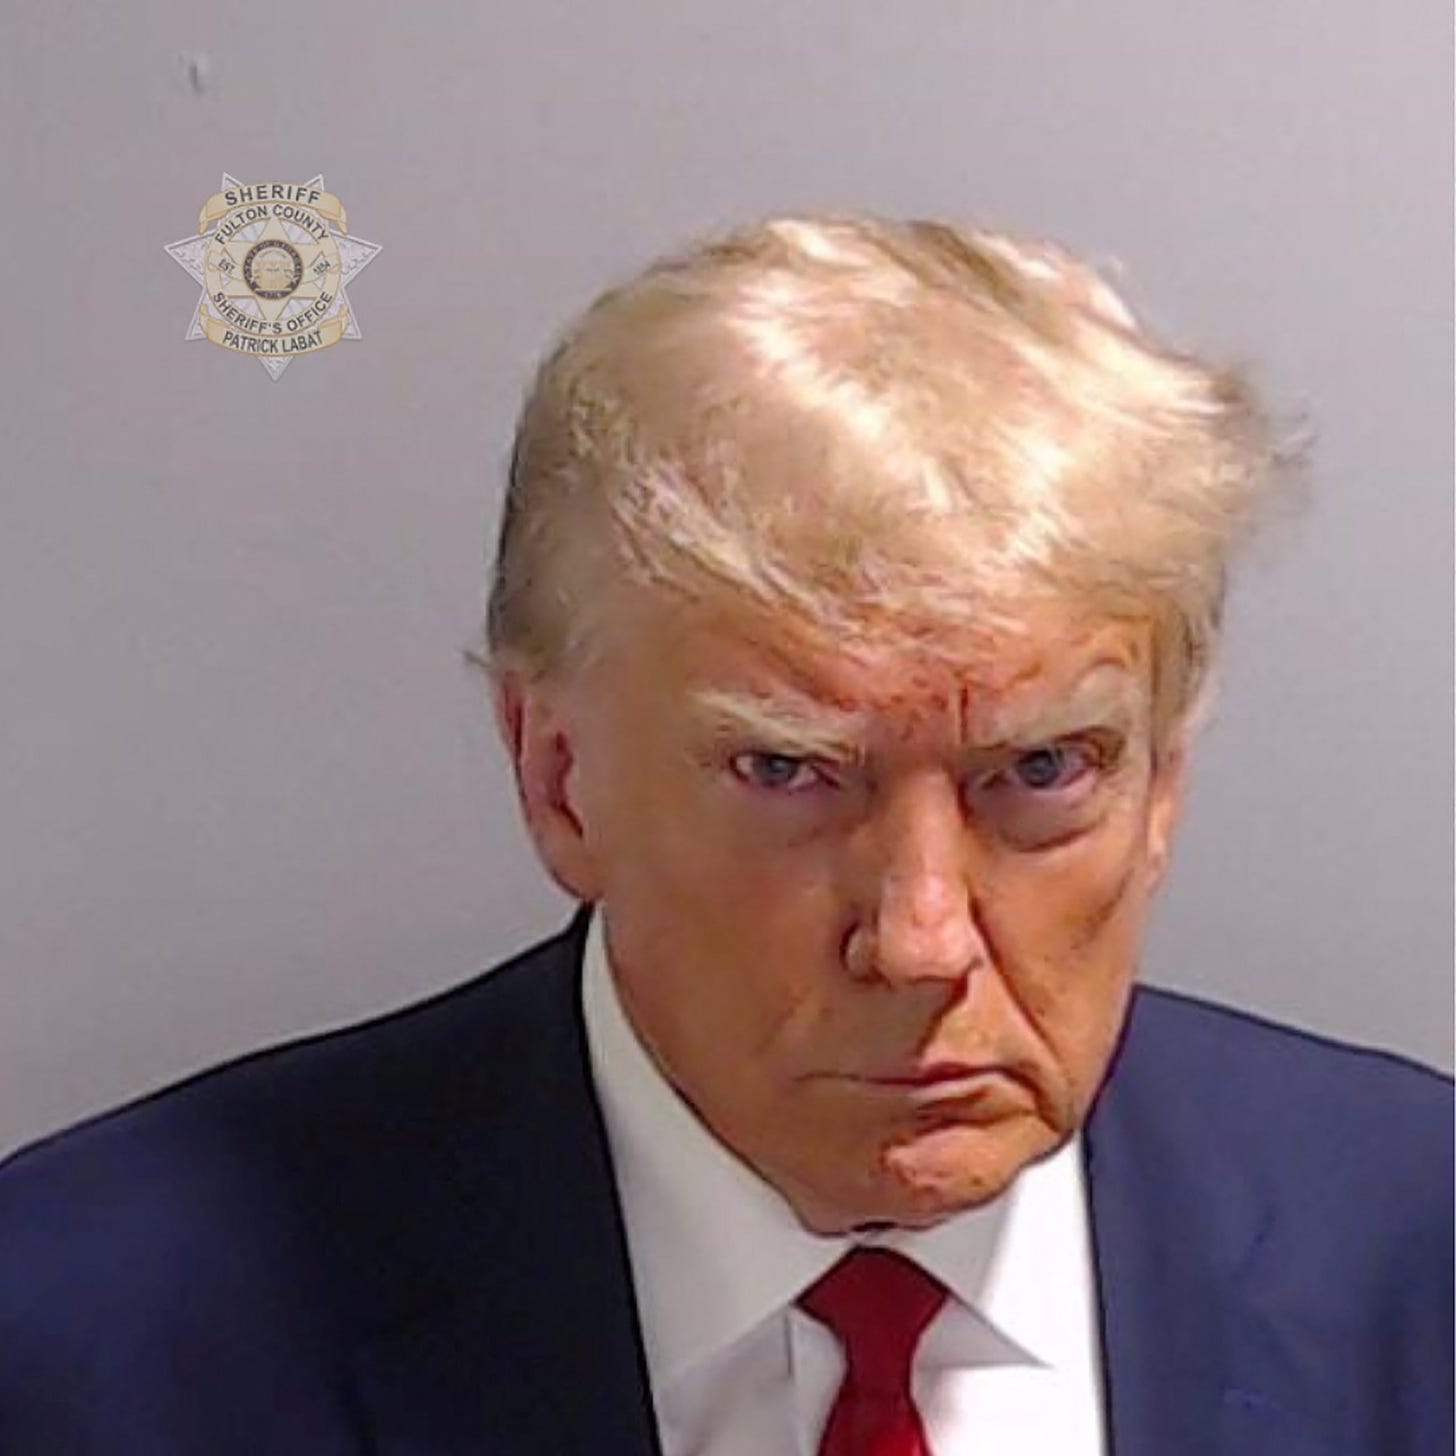 Trump's Mug Shot Is His True Presidential Portrait | The New Yorker